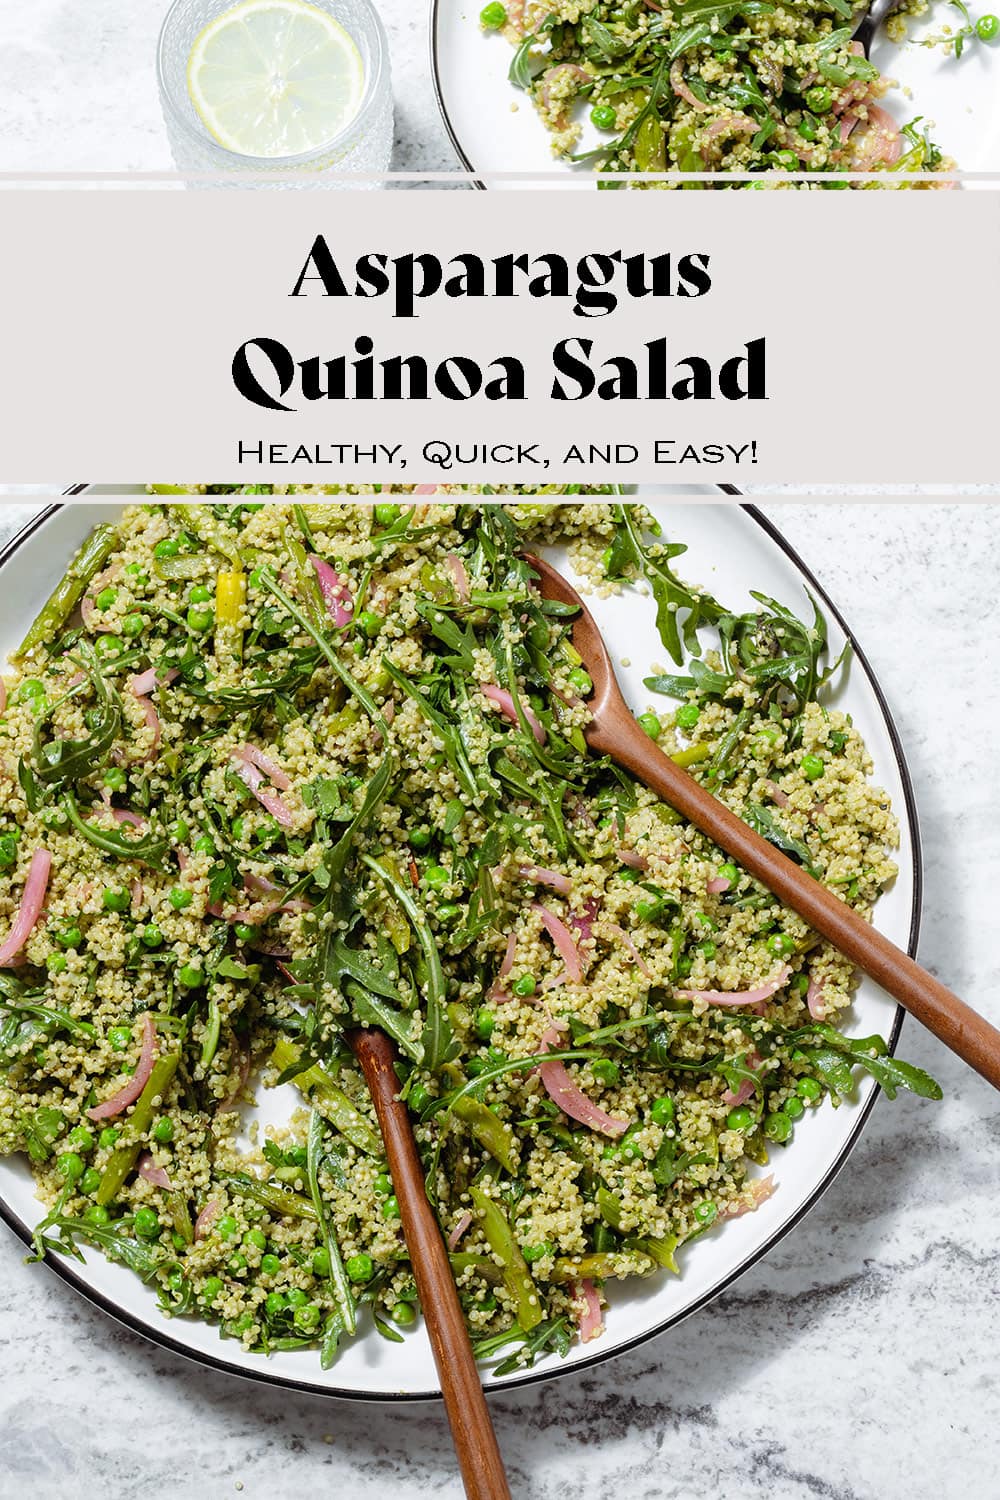 Asparagus Quinoa Salad with Pesto